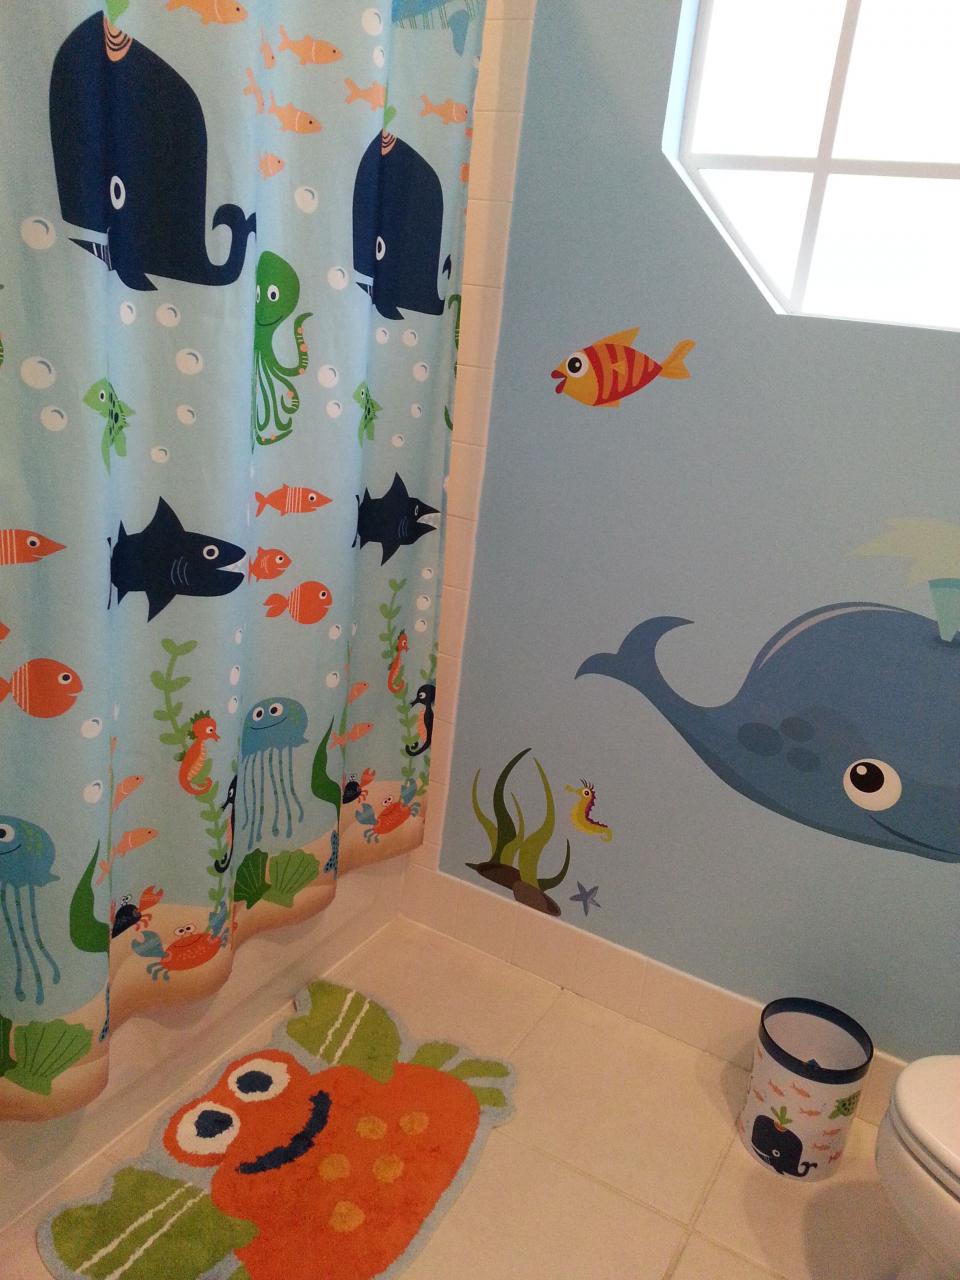 'Under the Sea' bathroom Kids bathroom themes, Sea bathroom decor